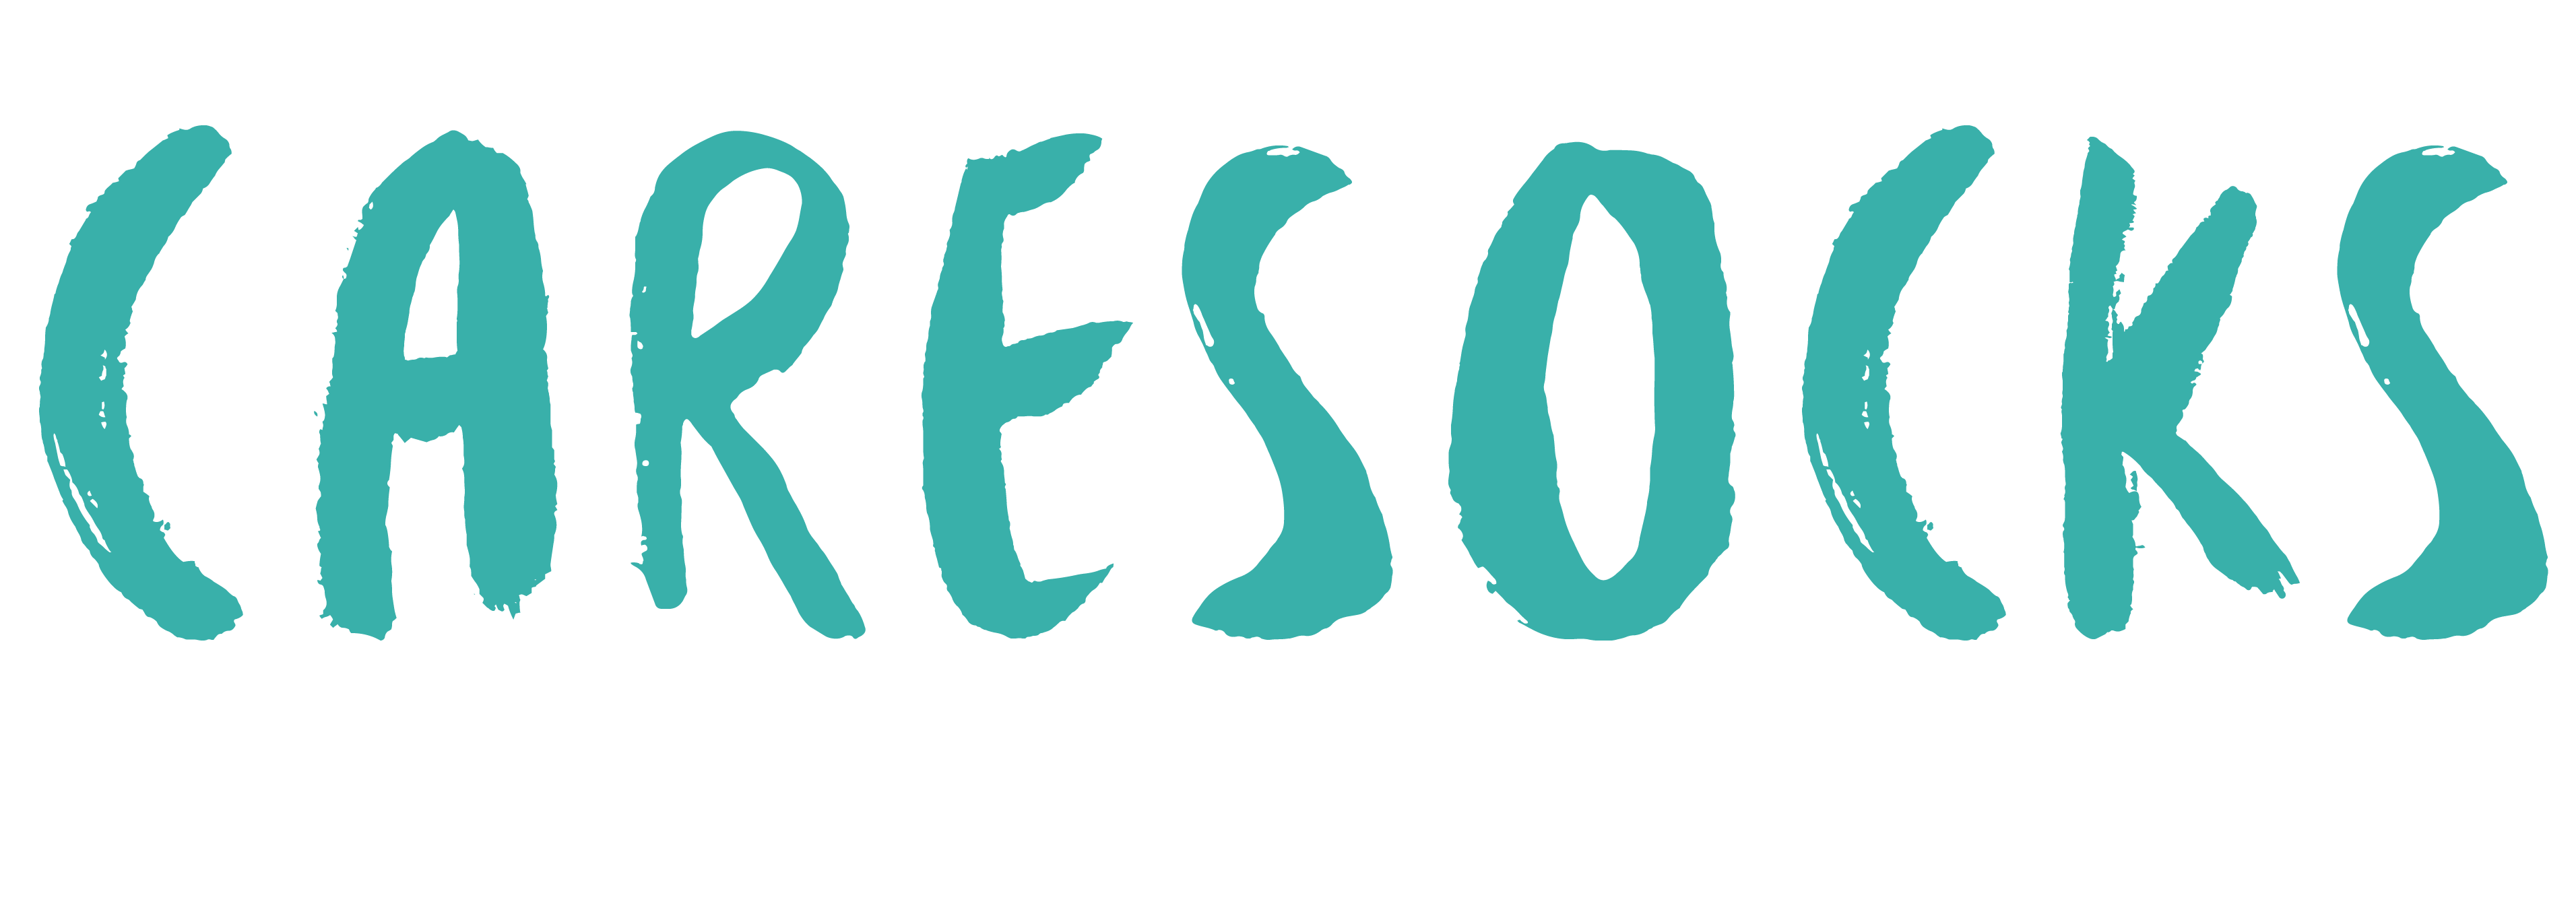 caresocks_logo